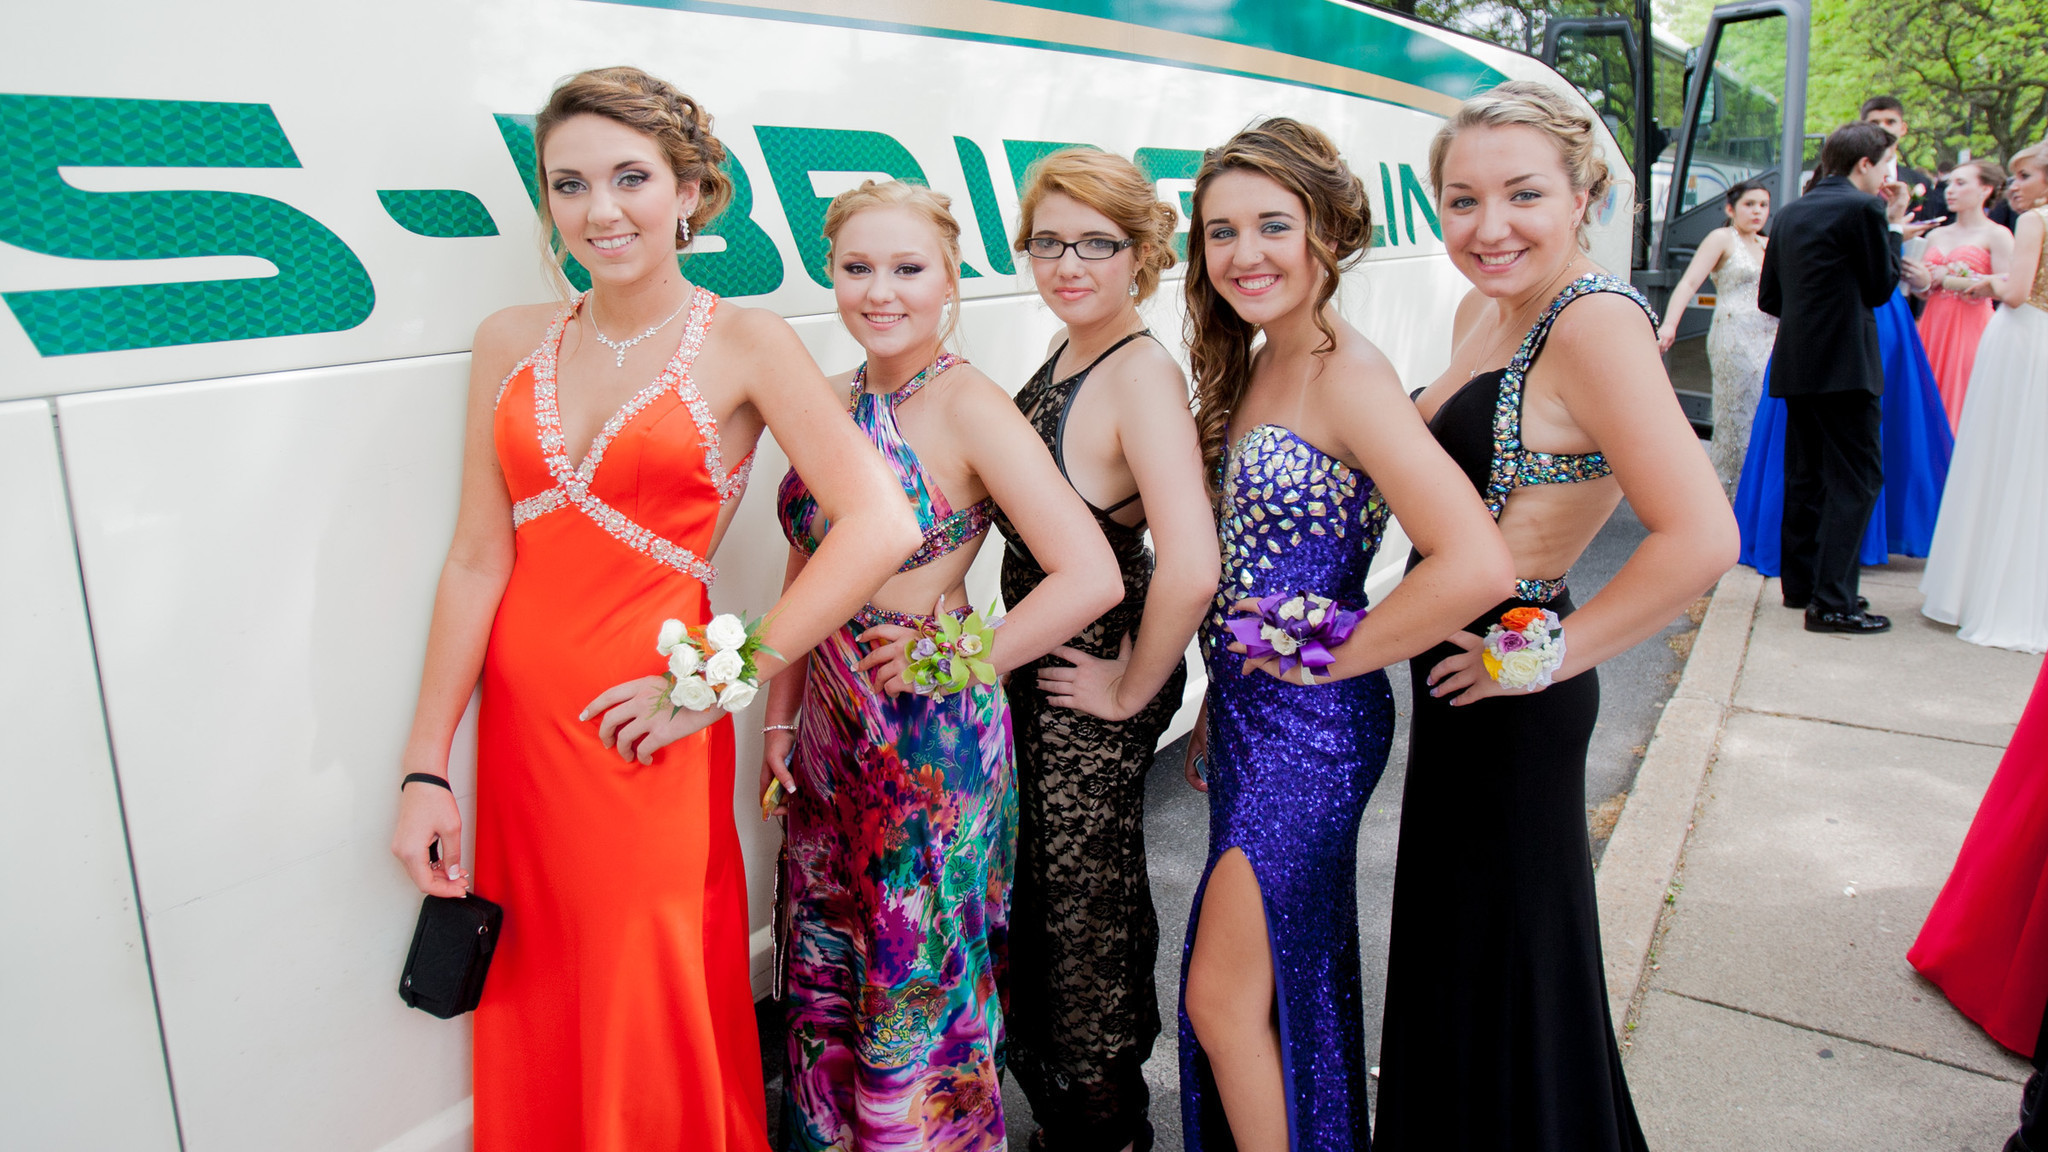 free high school prom clipart - photo #47